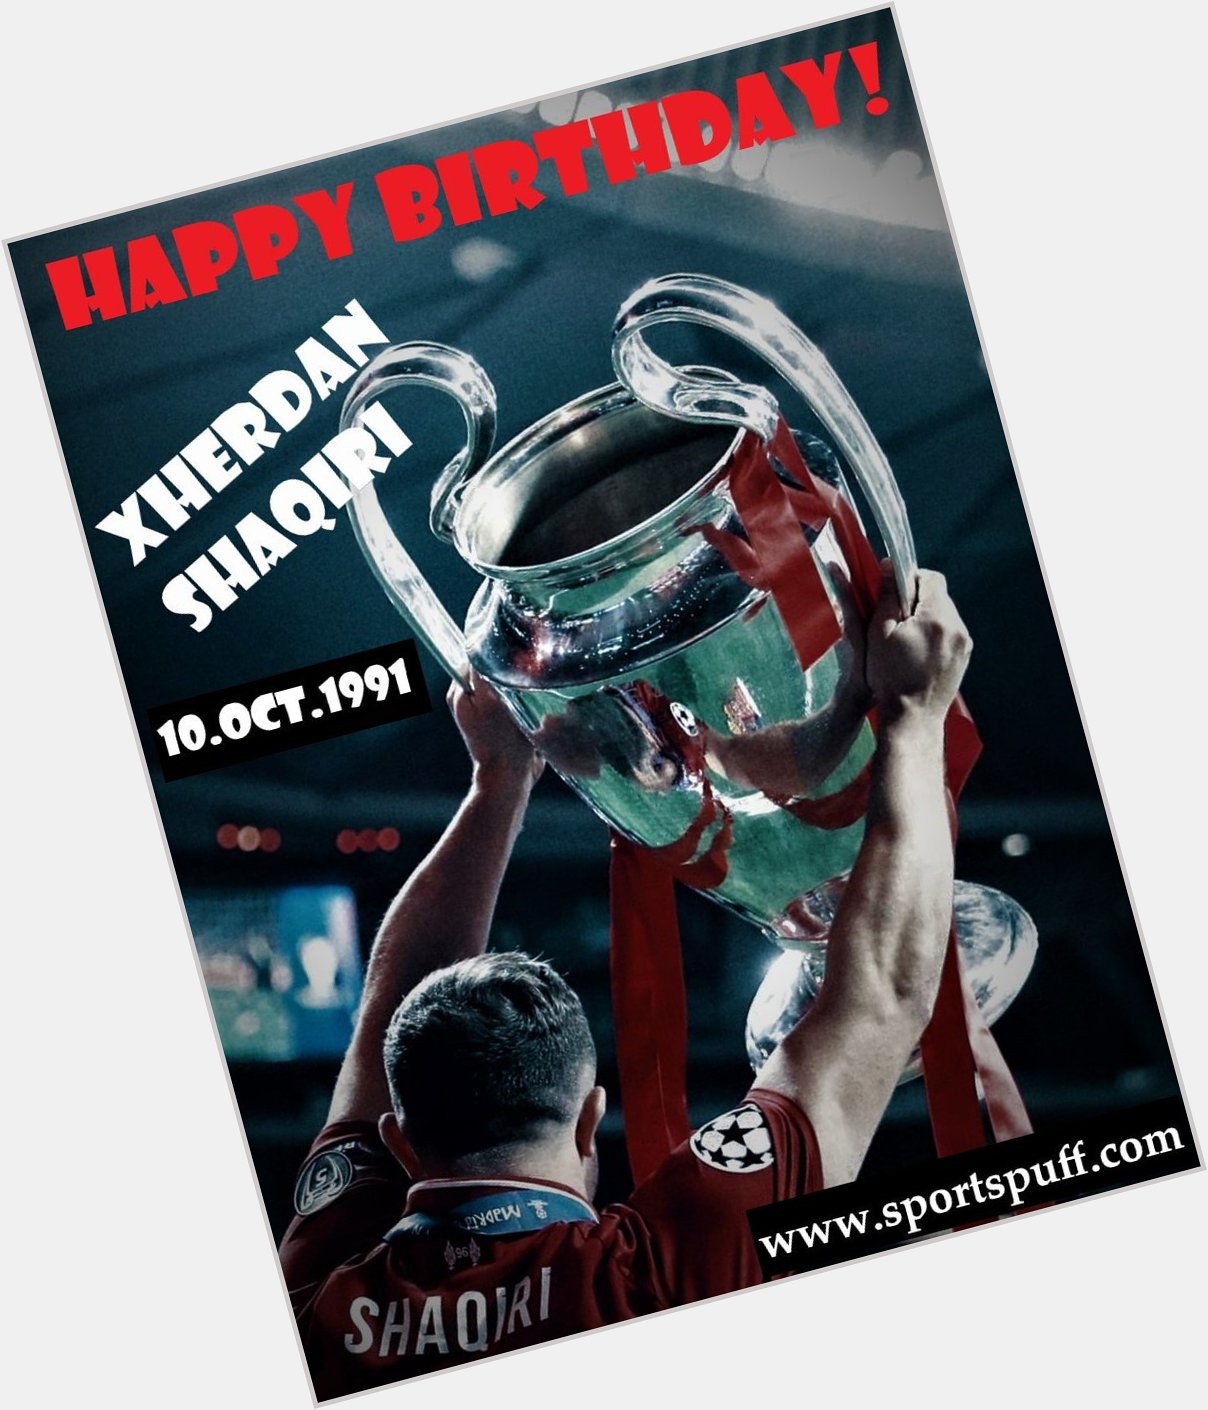 Xherdan Shaqiri-Liverpool and Swiss player turns 28 today,  is wishing him a happy birthday! 